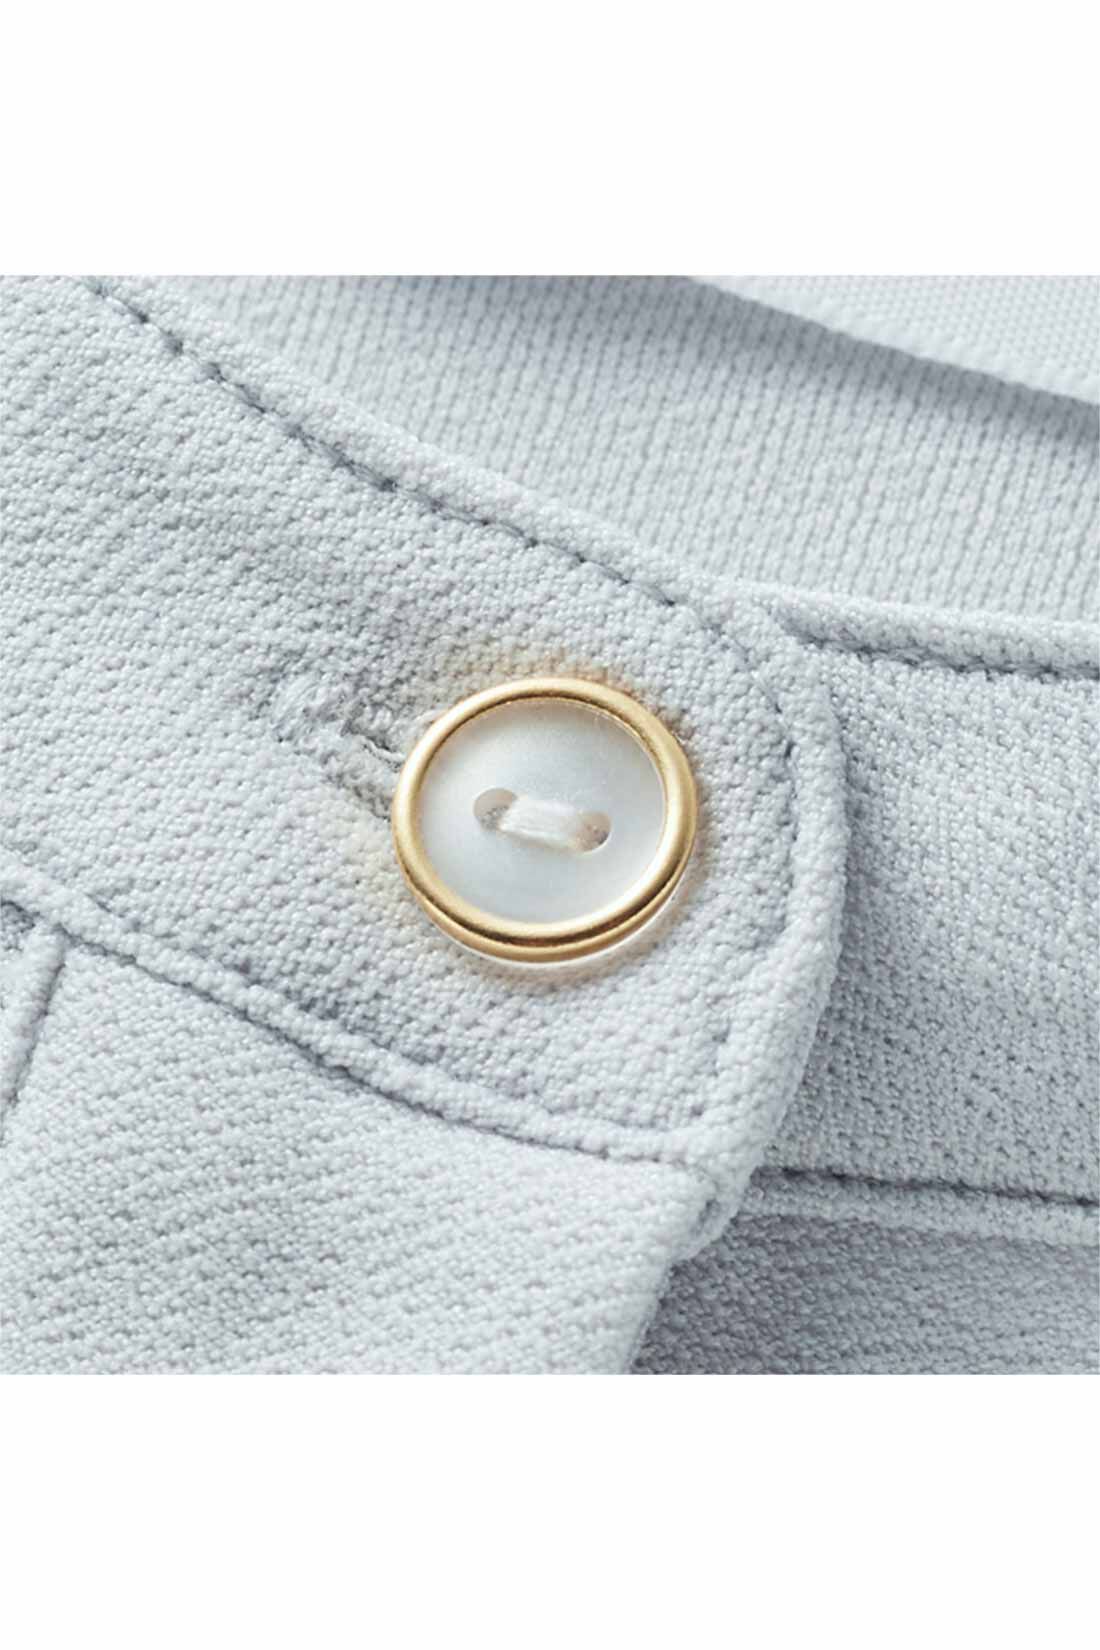 IEDIT|IEDIT[イディット]　後ろ姿も美しい伸びやかな抗菌防臭 バックプリーツトップス〈ライトグレー〉|衿とカフスに、きちんと感のあるゴールドの縁飾りボタンをアクセントとして。